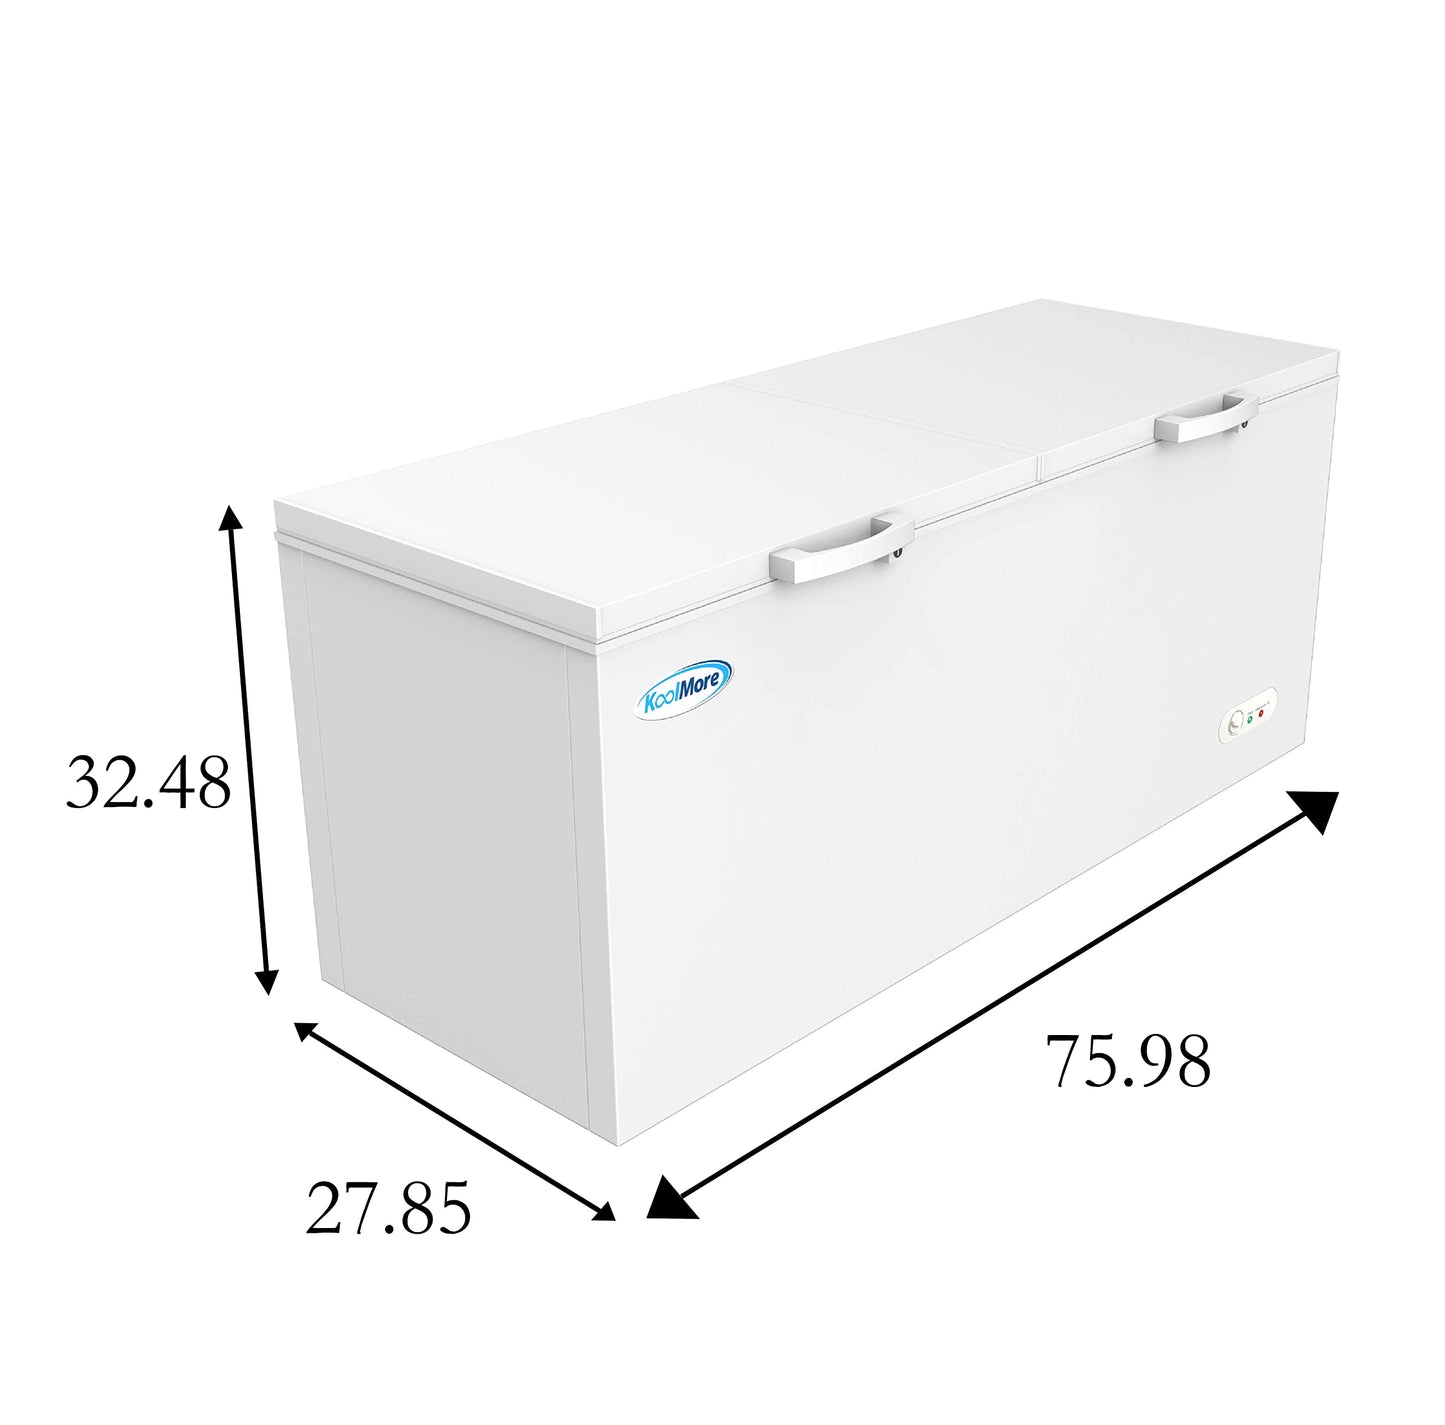 KoolMore SCF-20C Chest Freezer, 20 cu. Ft, White